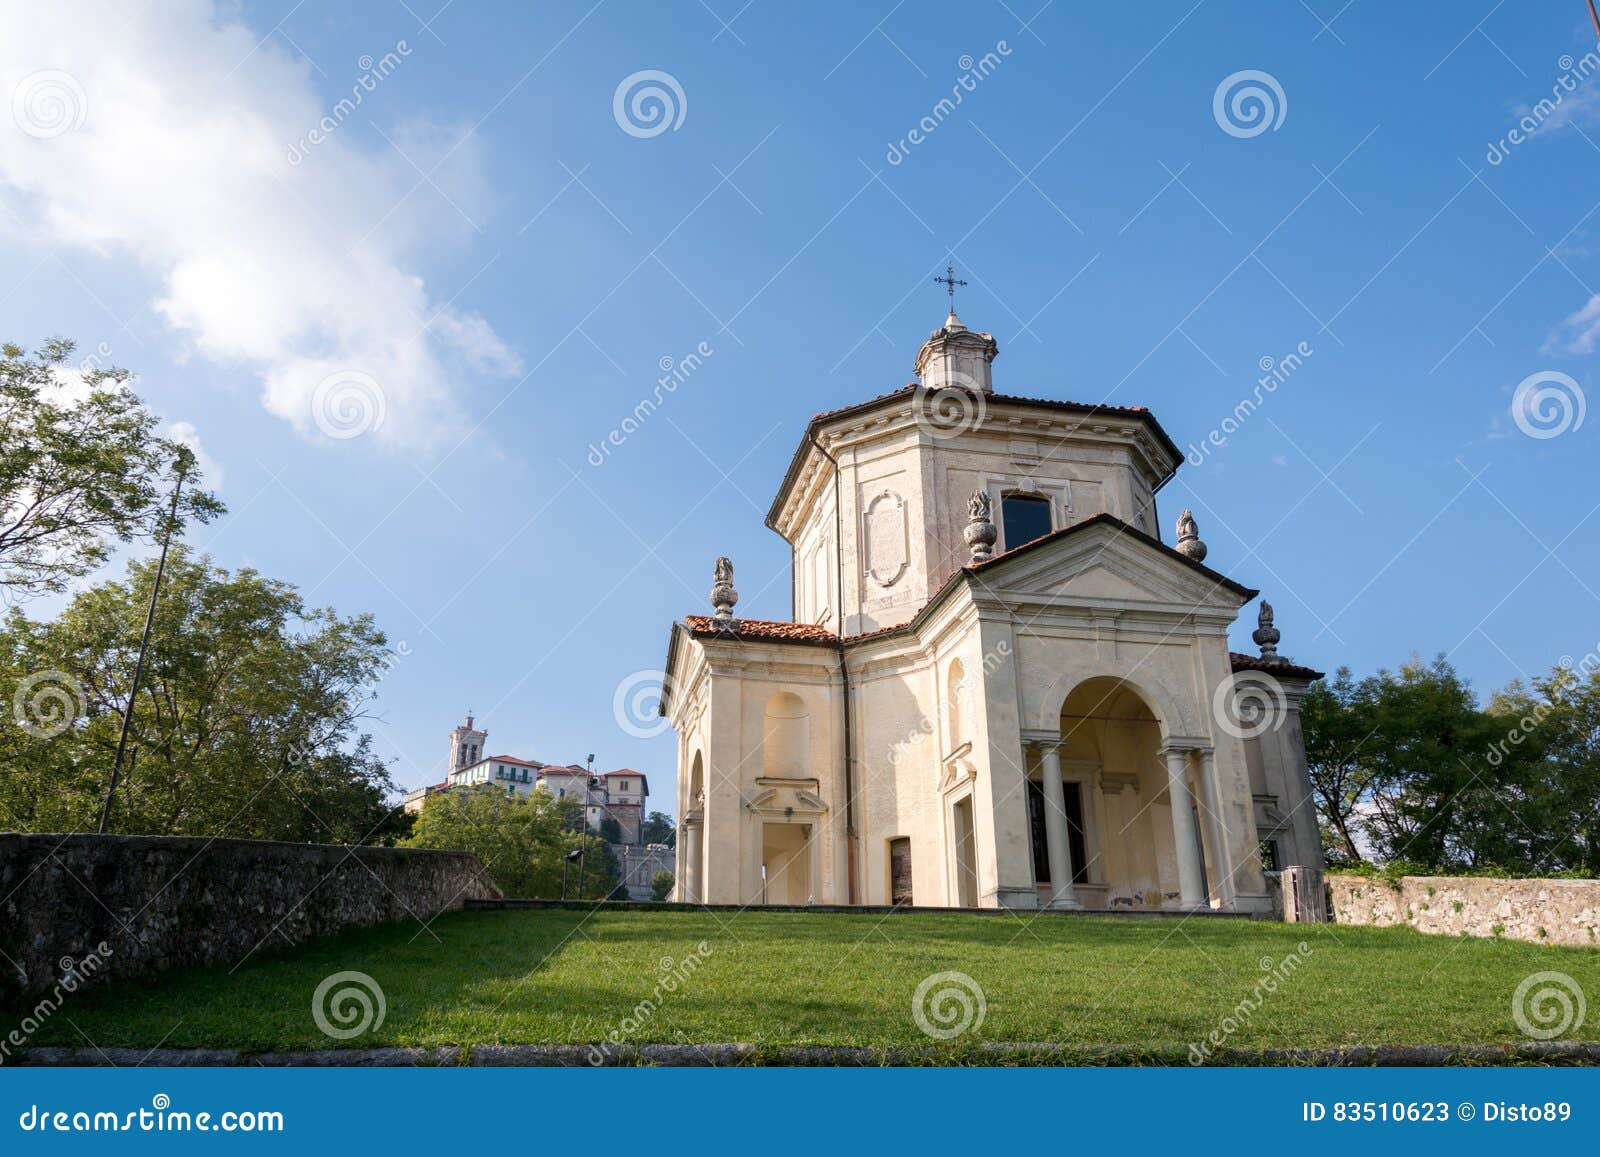 fourteenth chapel at sacro monte di varese. italy